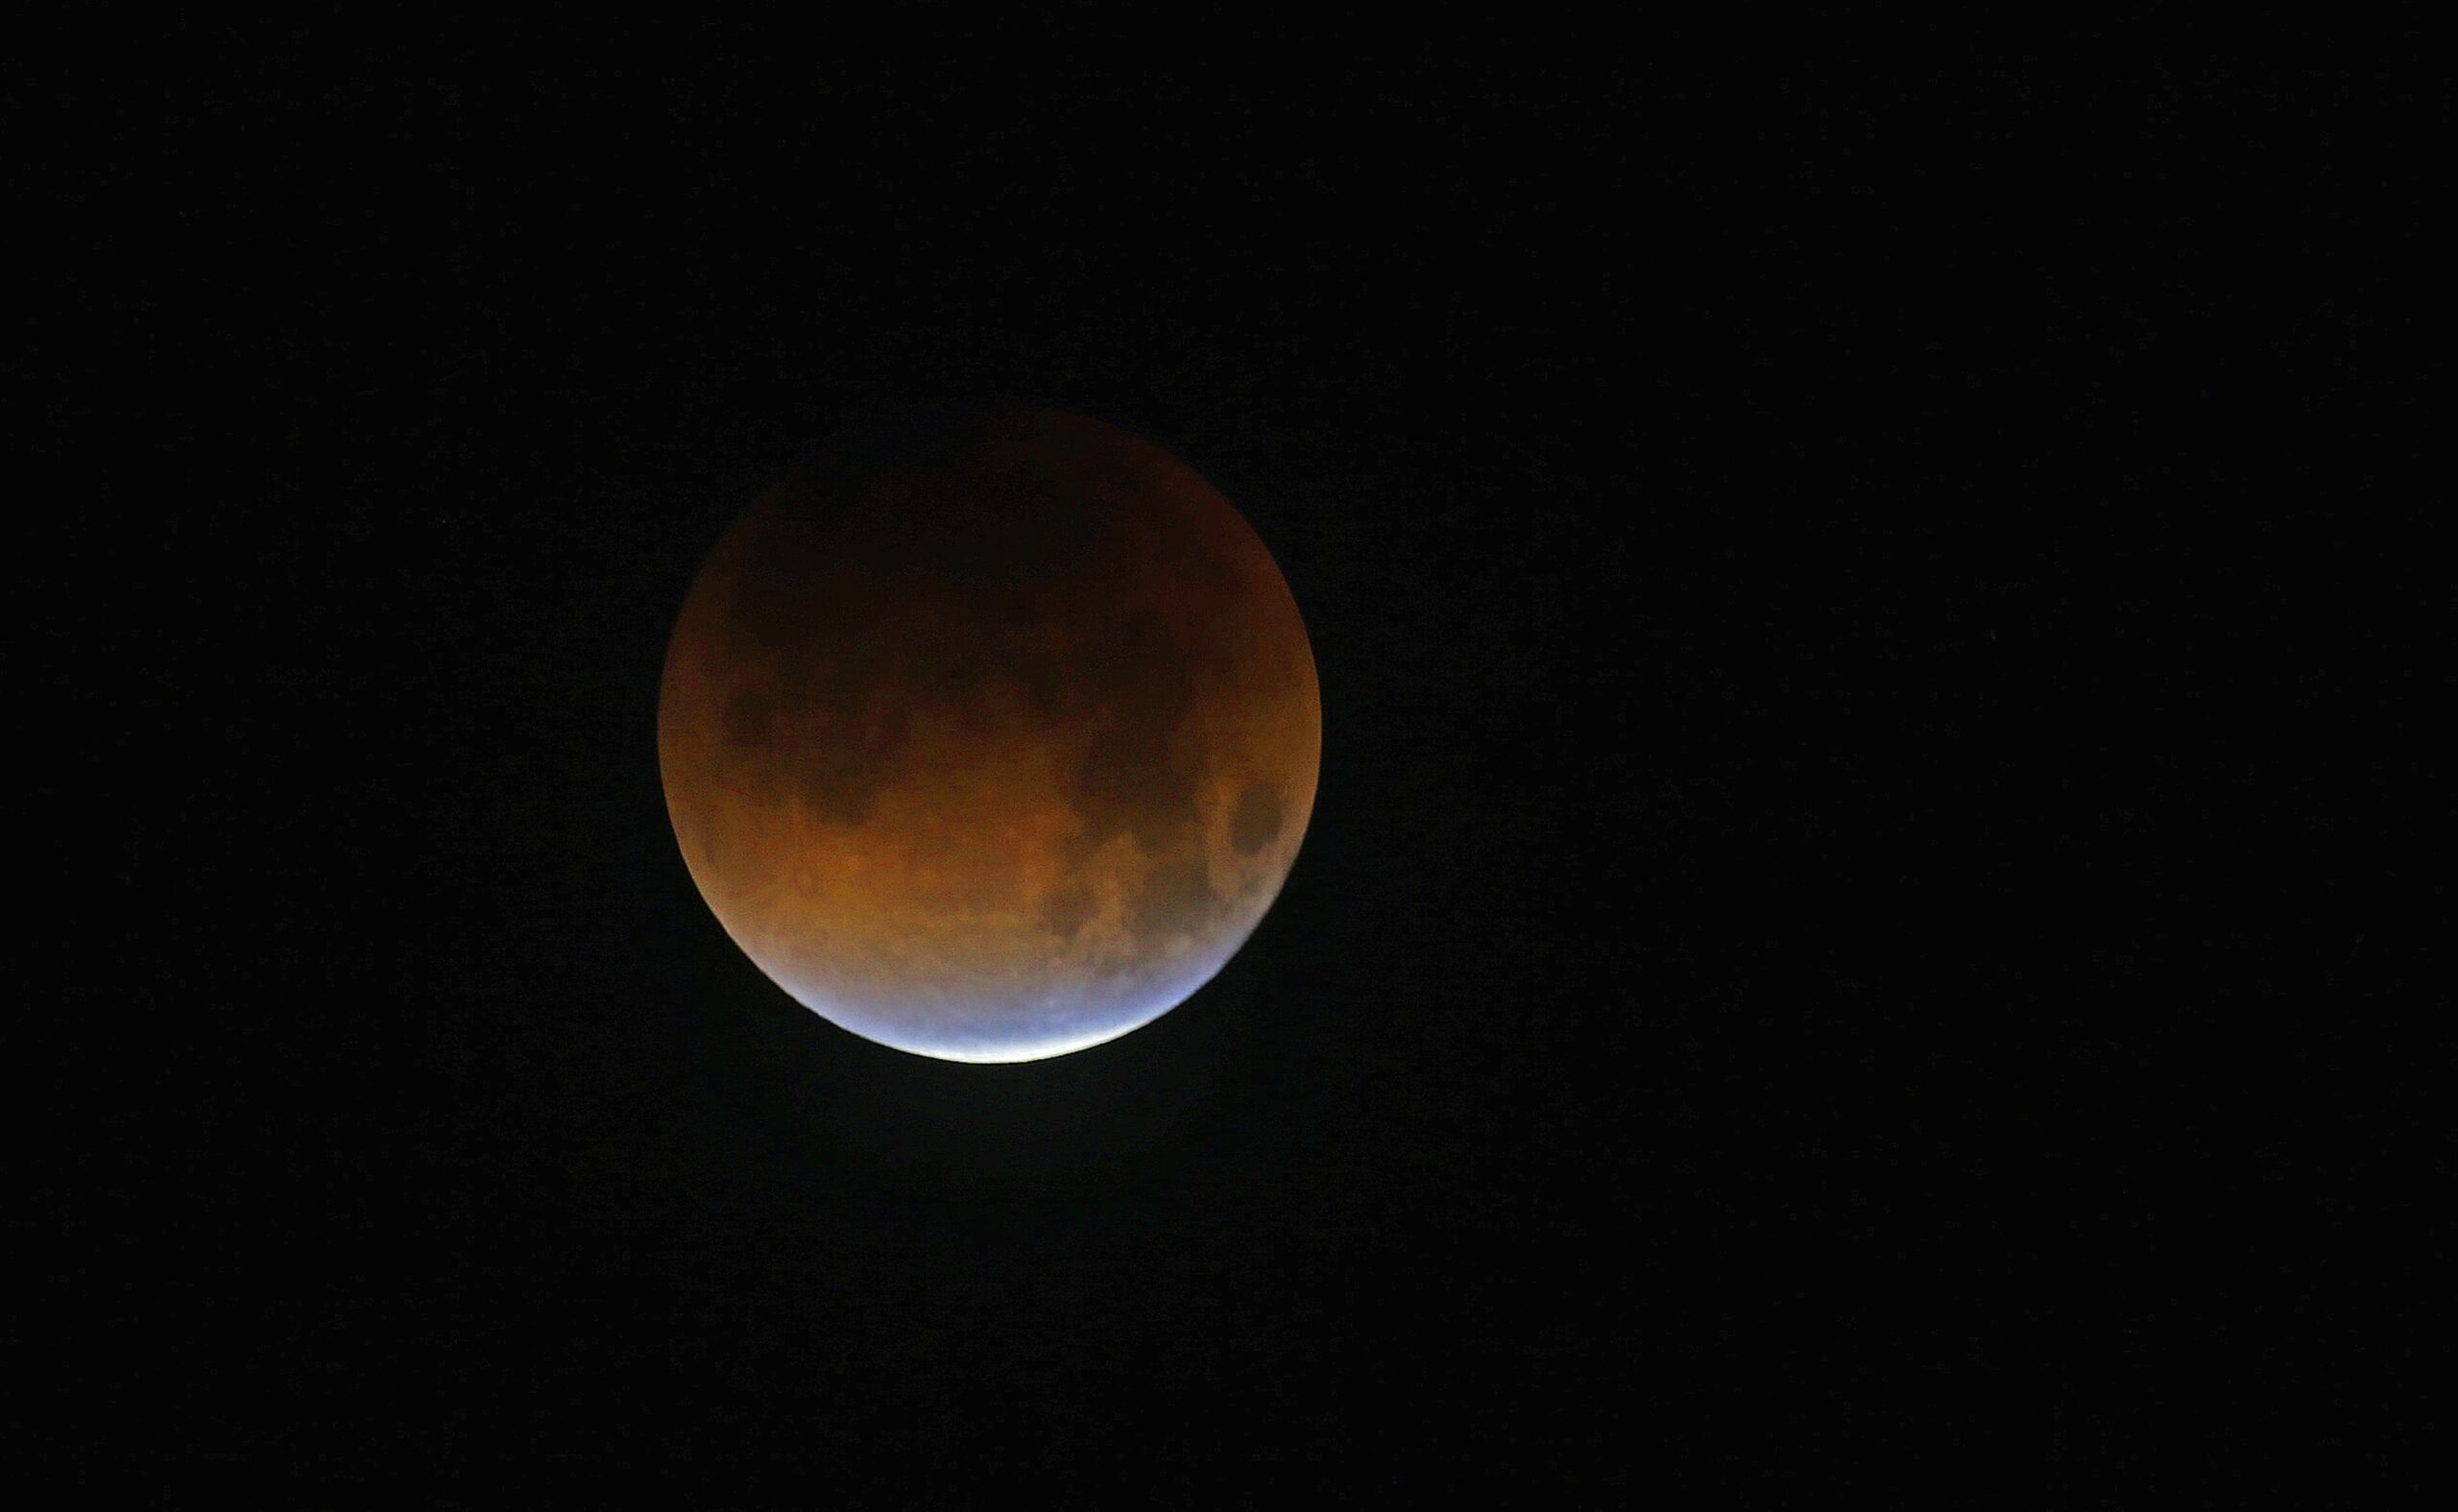 Weekend Roundup: A ‘super flower blood moon’ lunar eclipse visible across Wisconsin Sunday night